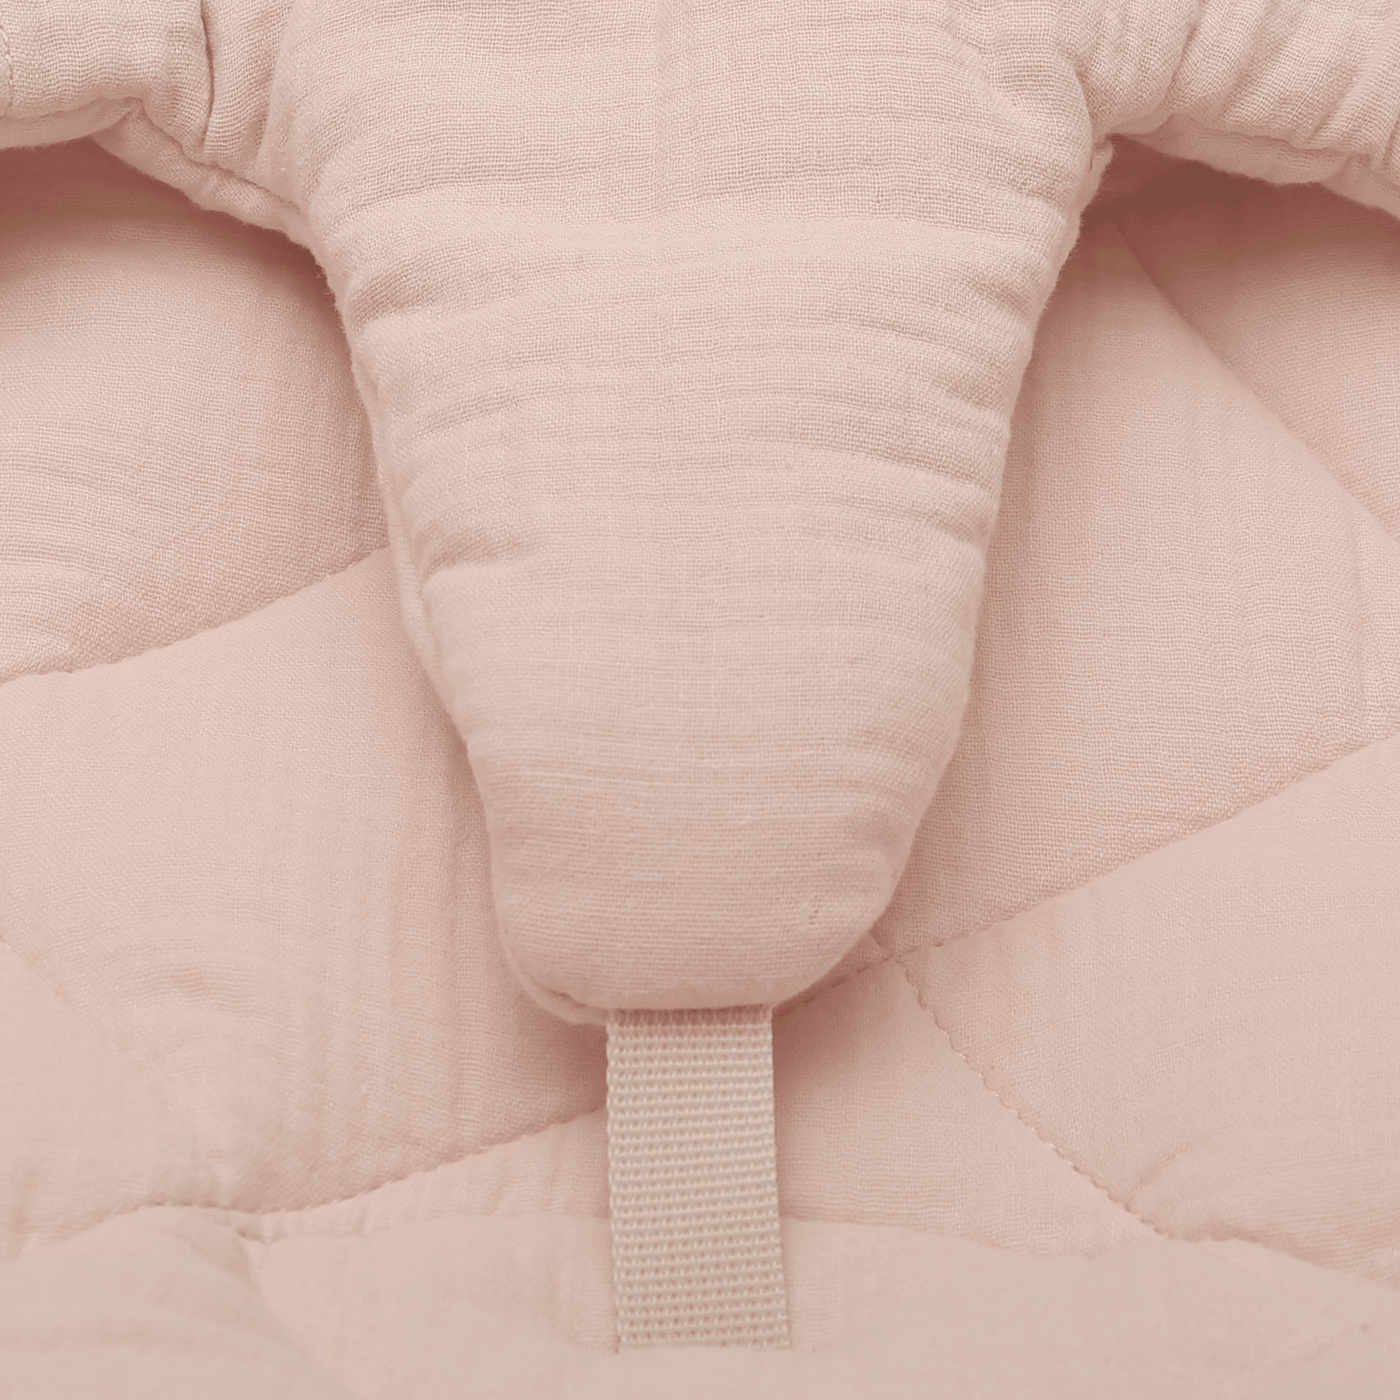 Charlie Crane Levo Baby Rocker - Beech + Nude Pink Cushion